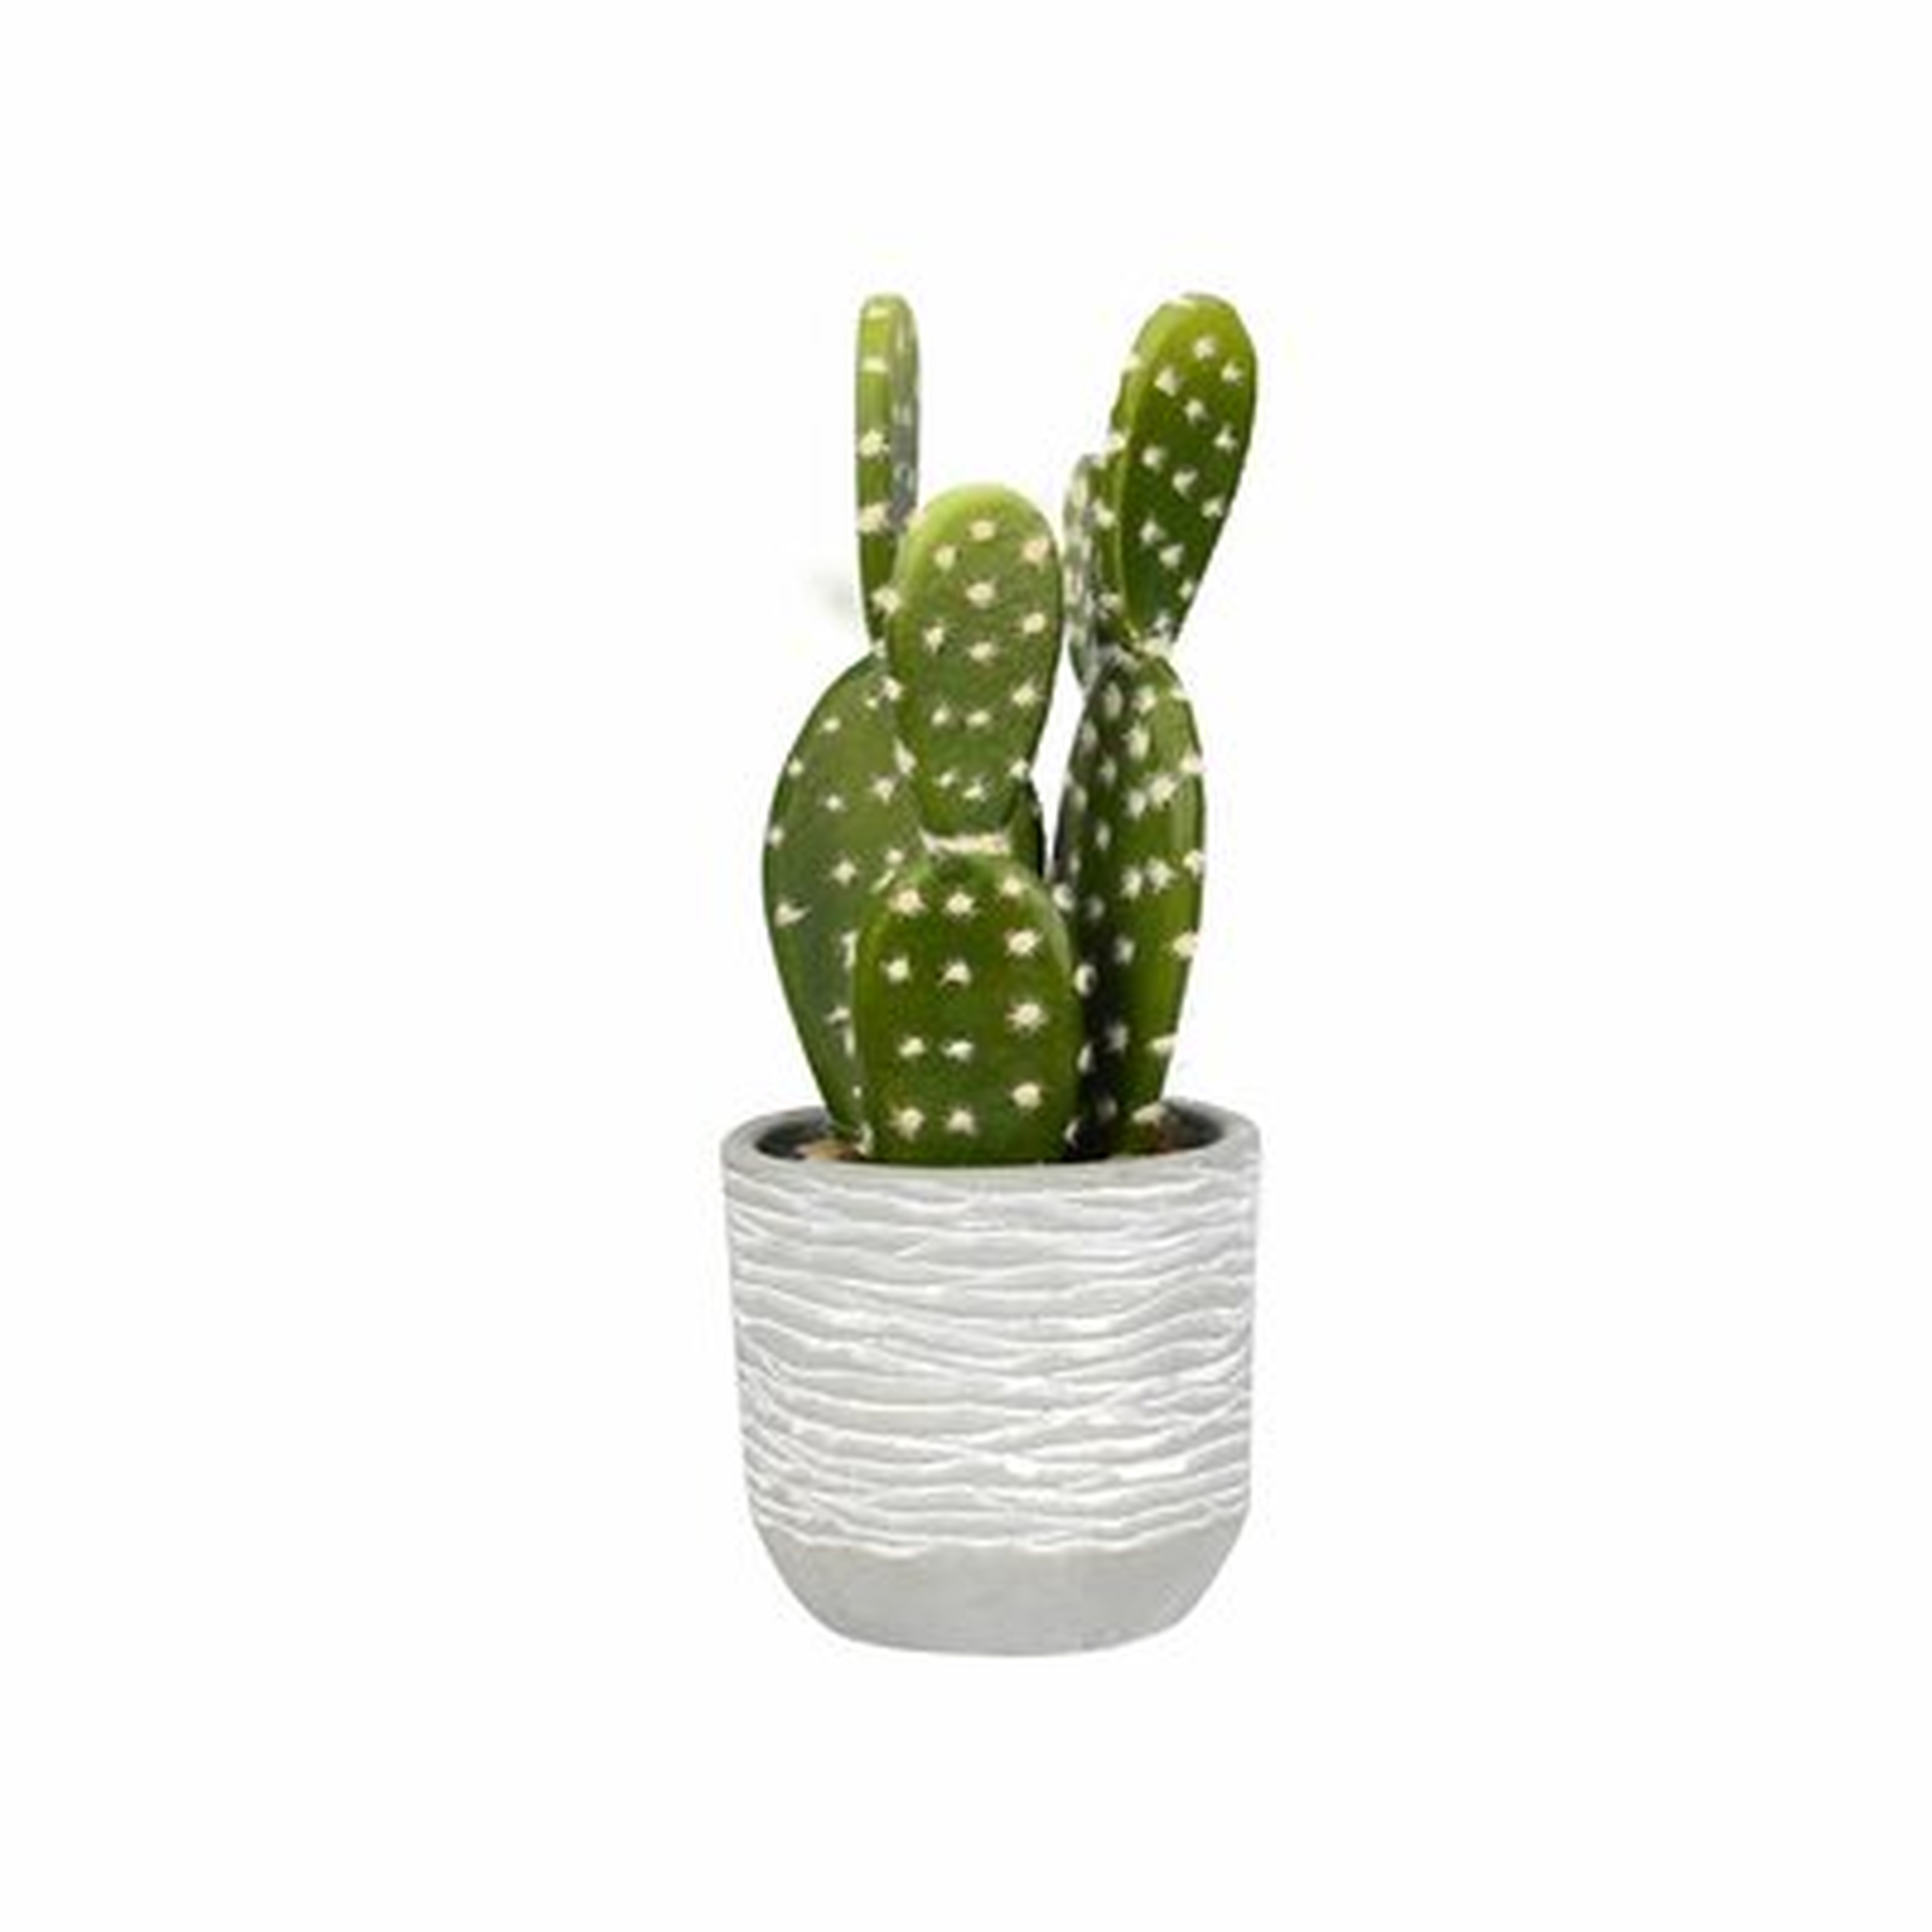 Cactus Succulent in Pot - Wayfair